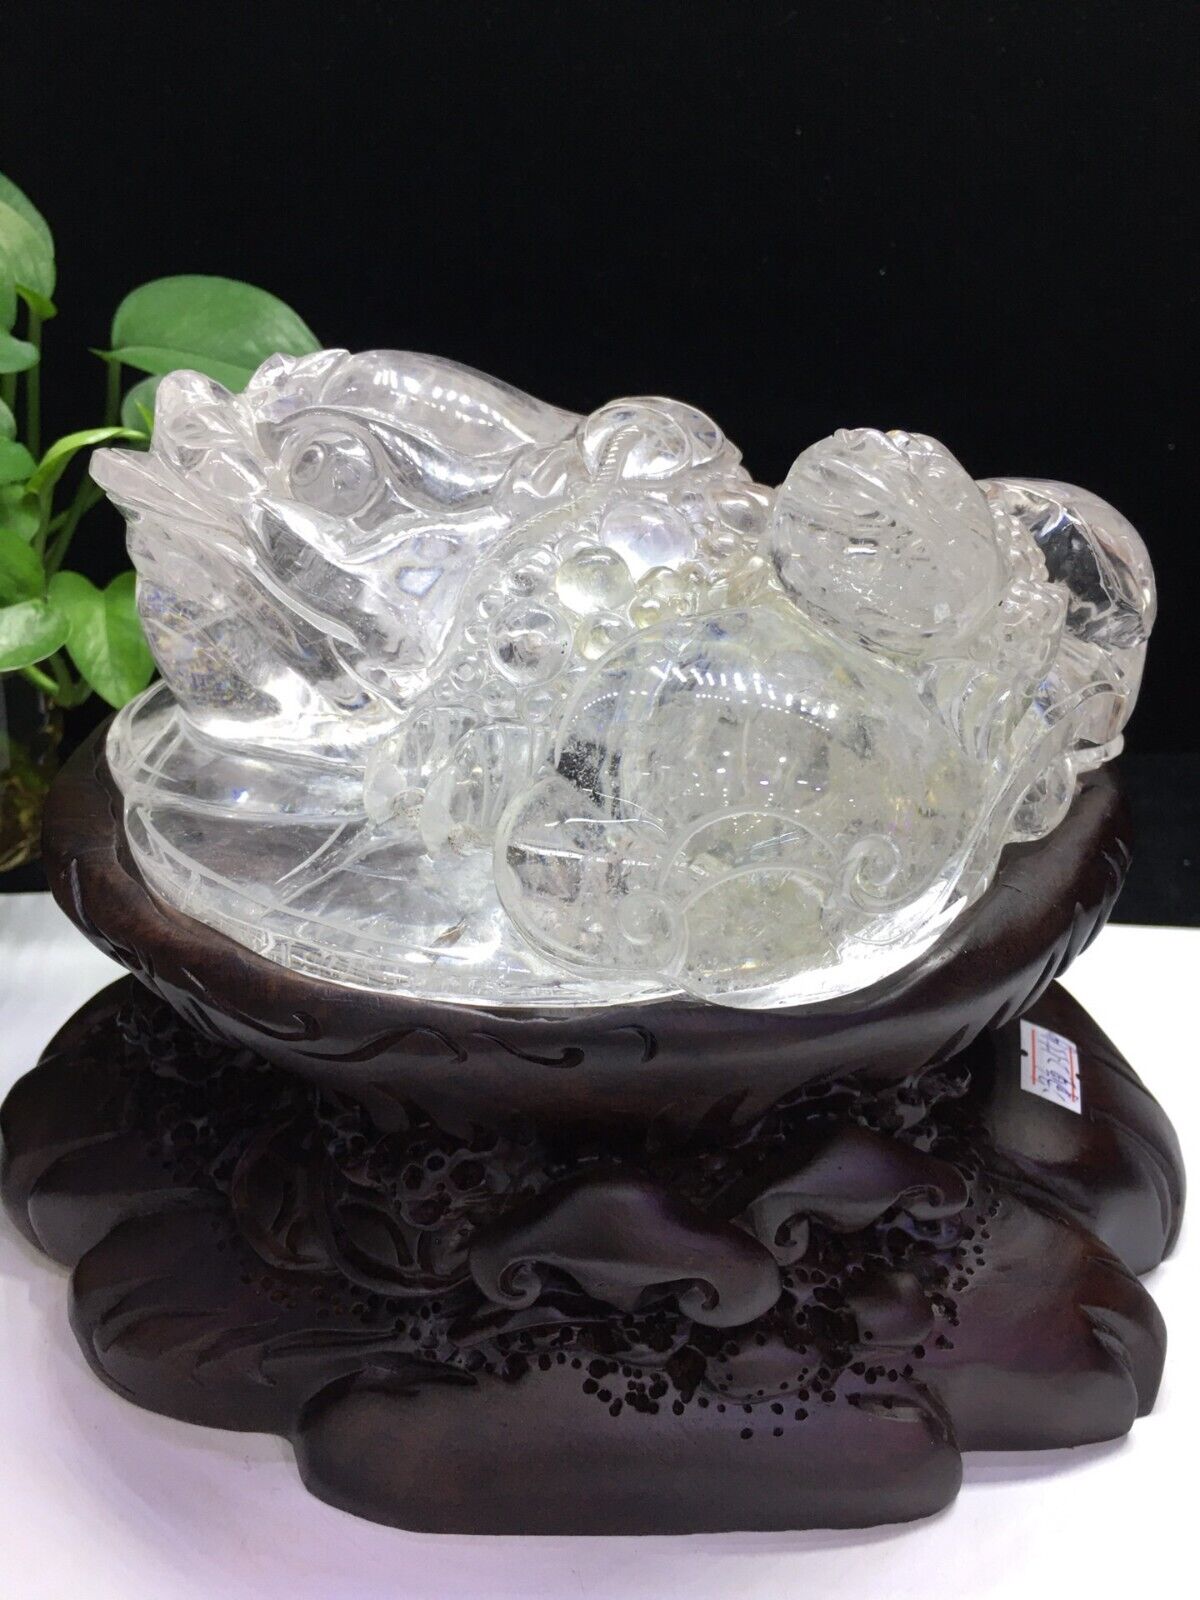 11.46LB Natural clear quartz gold toad Quartz Crystal carved decoration+Stand